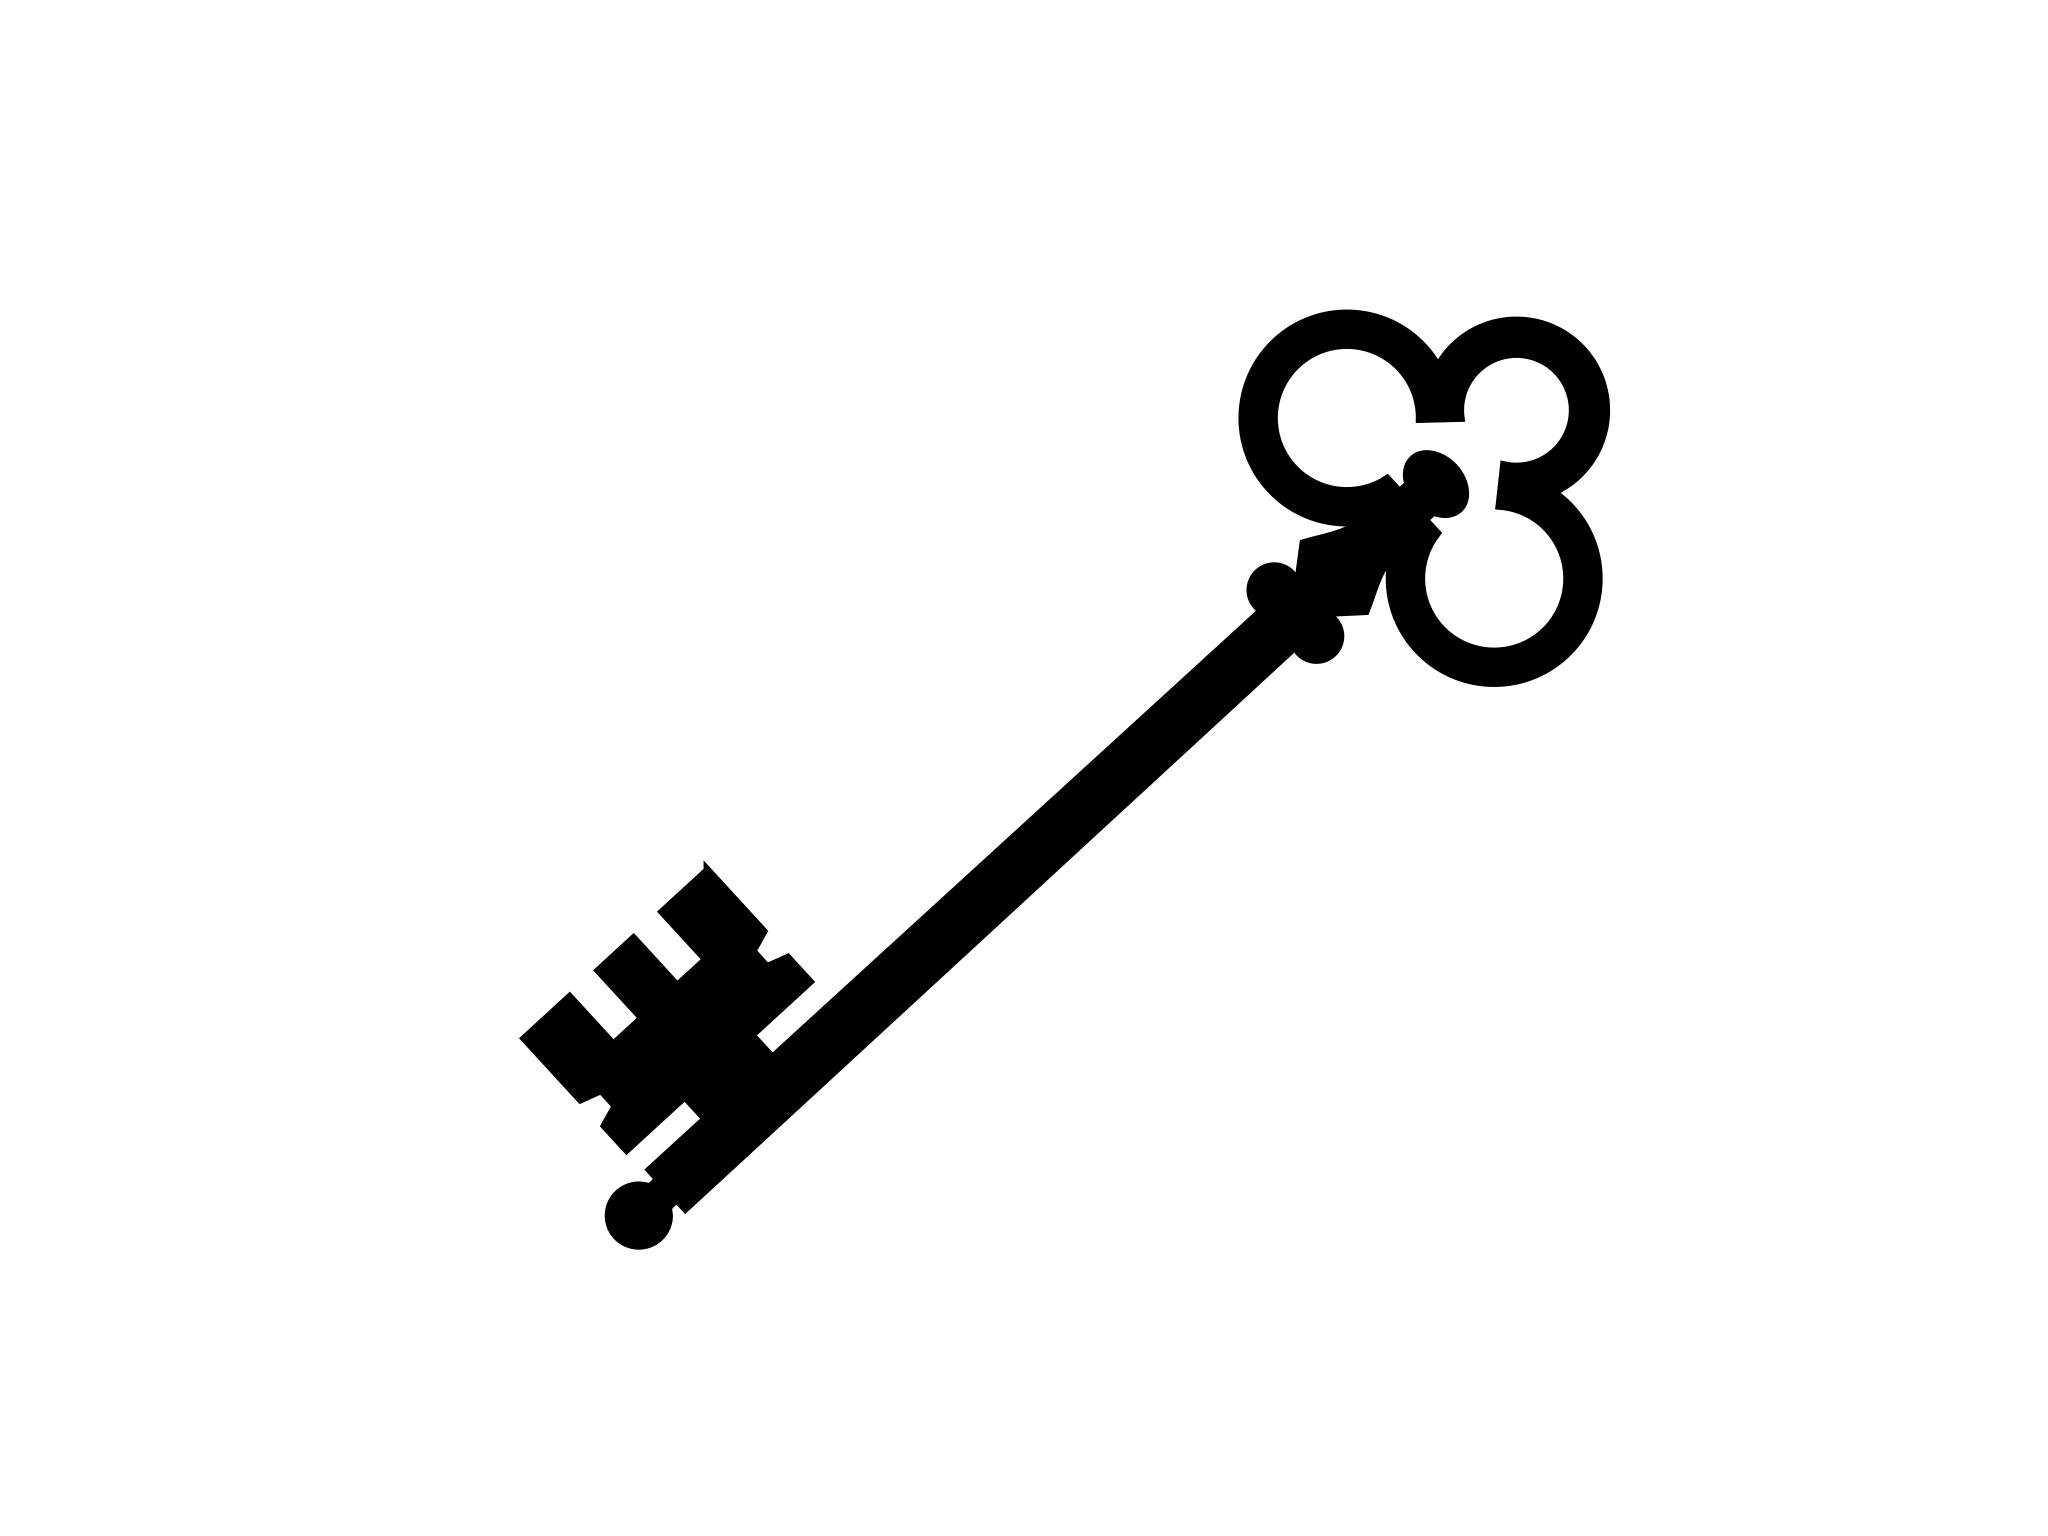 Key черный. Ключ черно белый. Ключик вектор. Ключ трафарет. Золотой ключик трафарет.